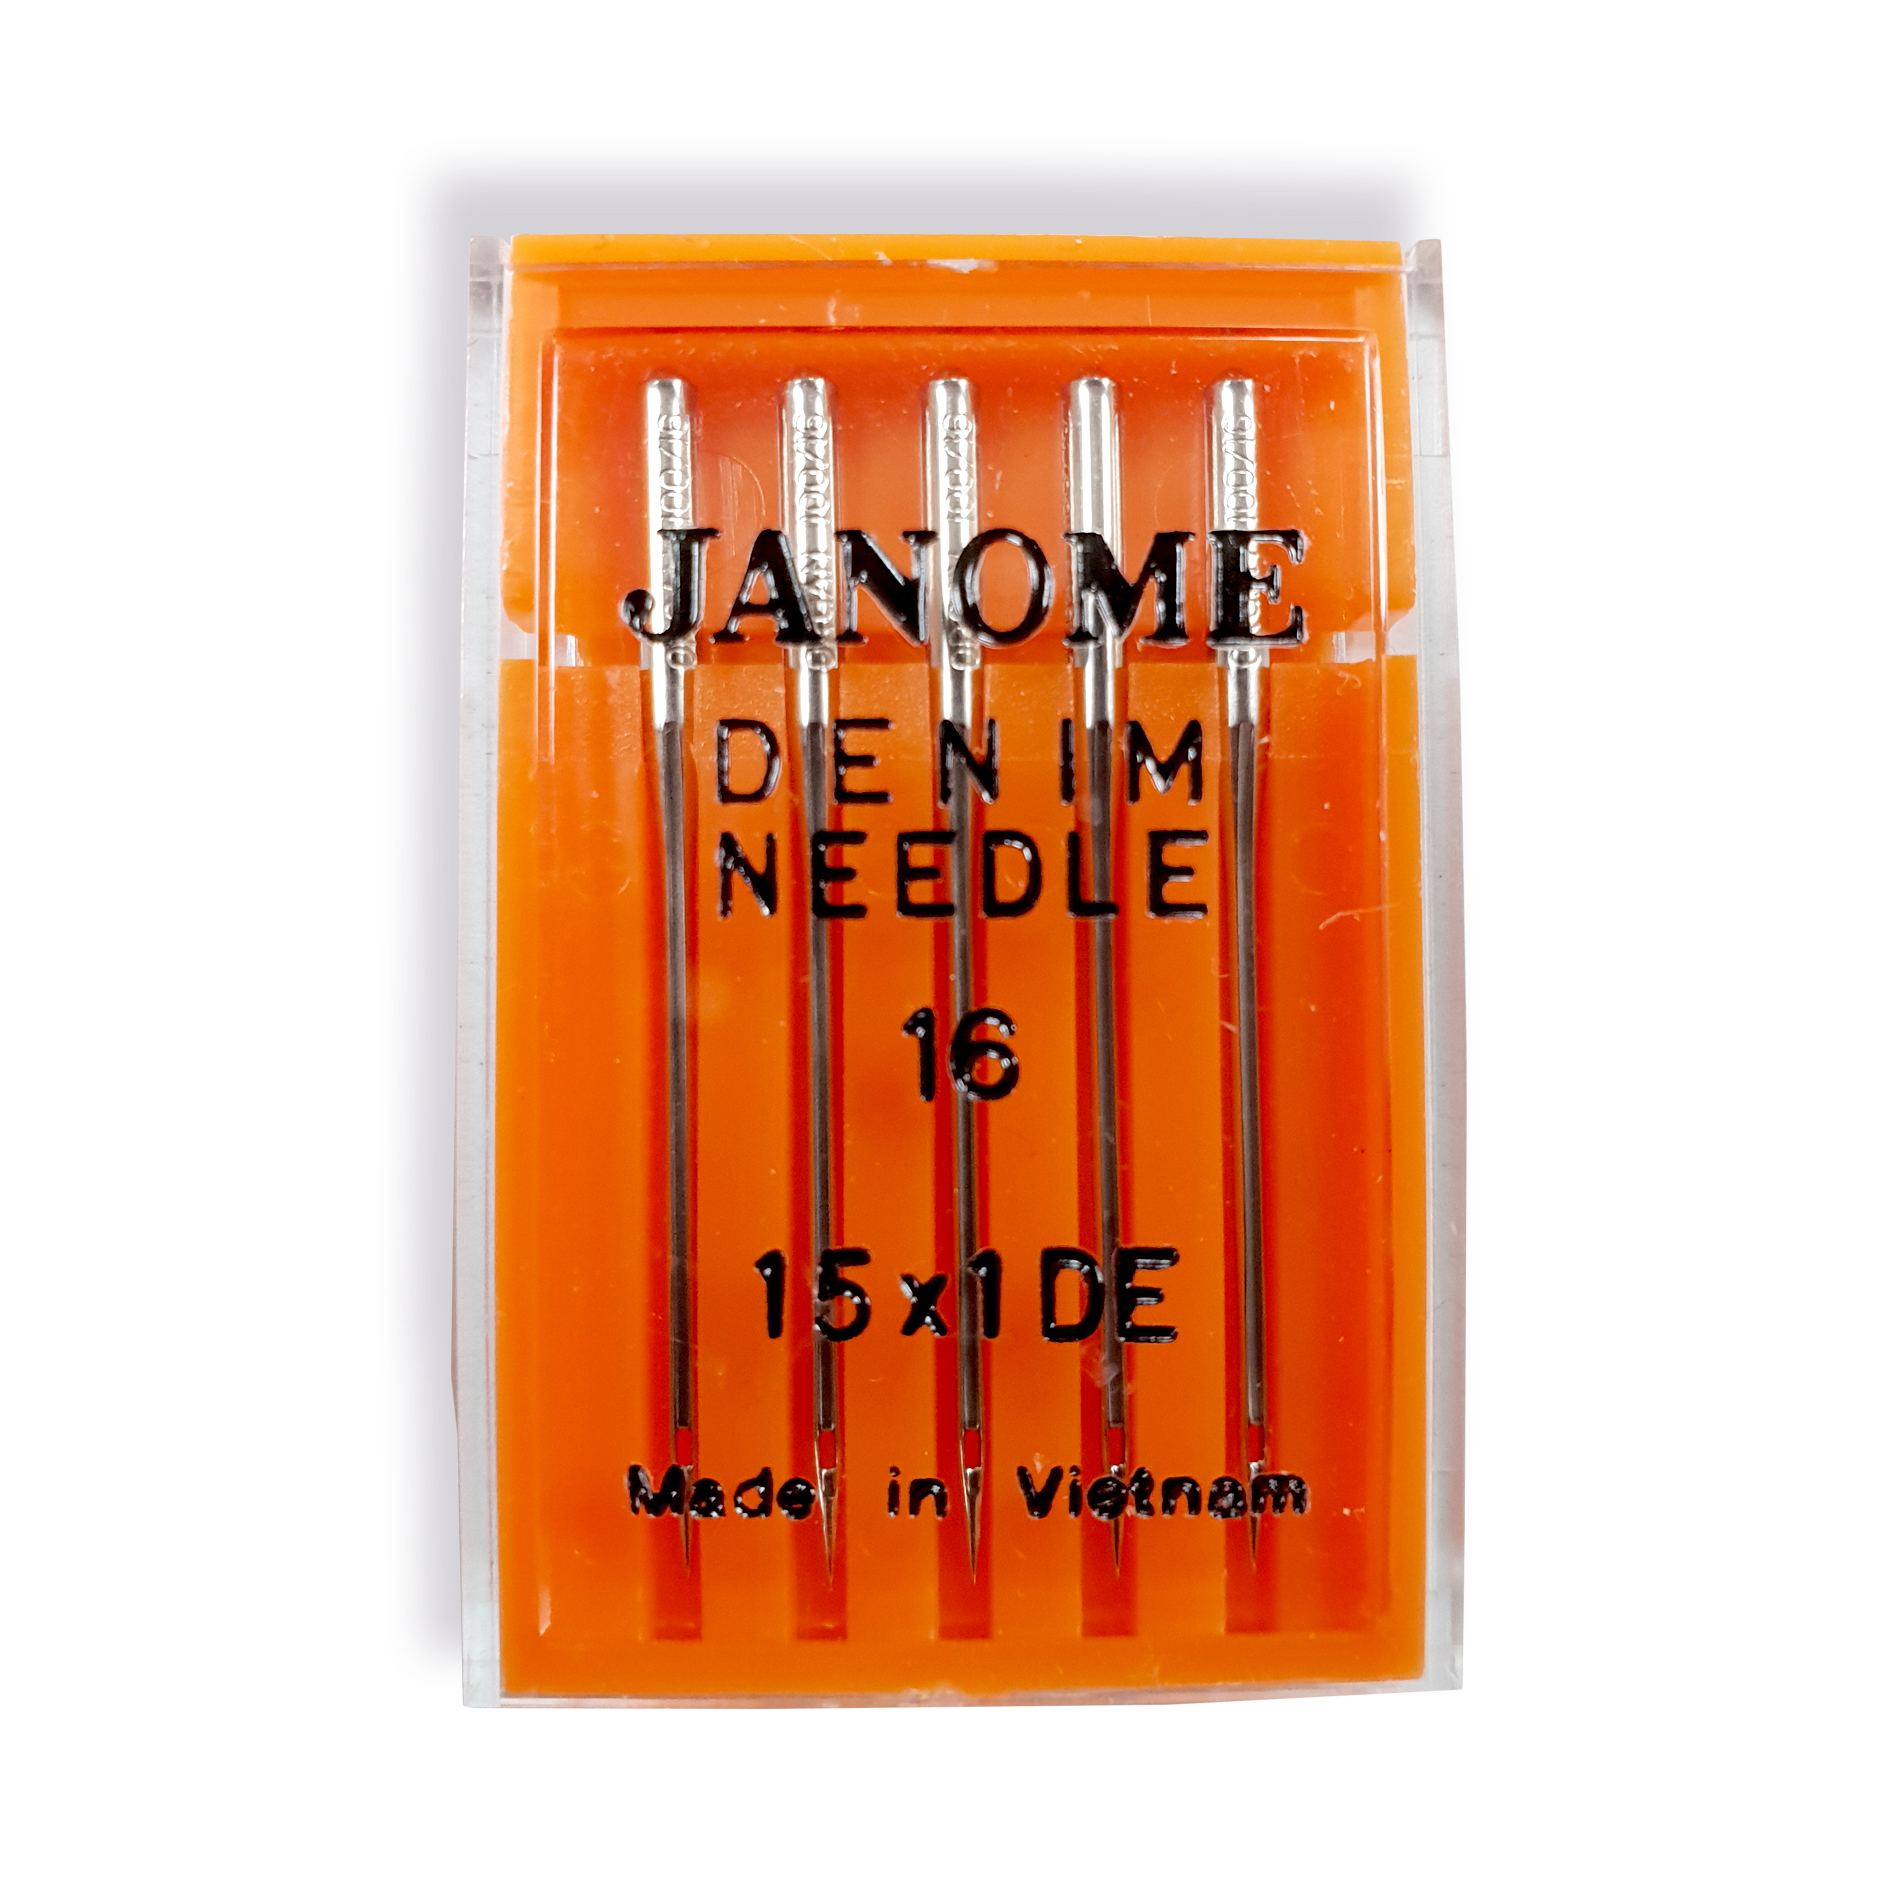 Denim Needle UK Size 16 Metric Size 90-100 - Janome J-Shop